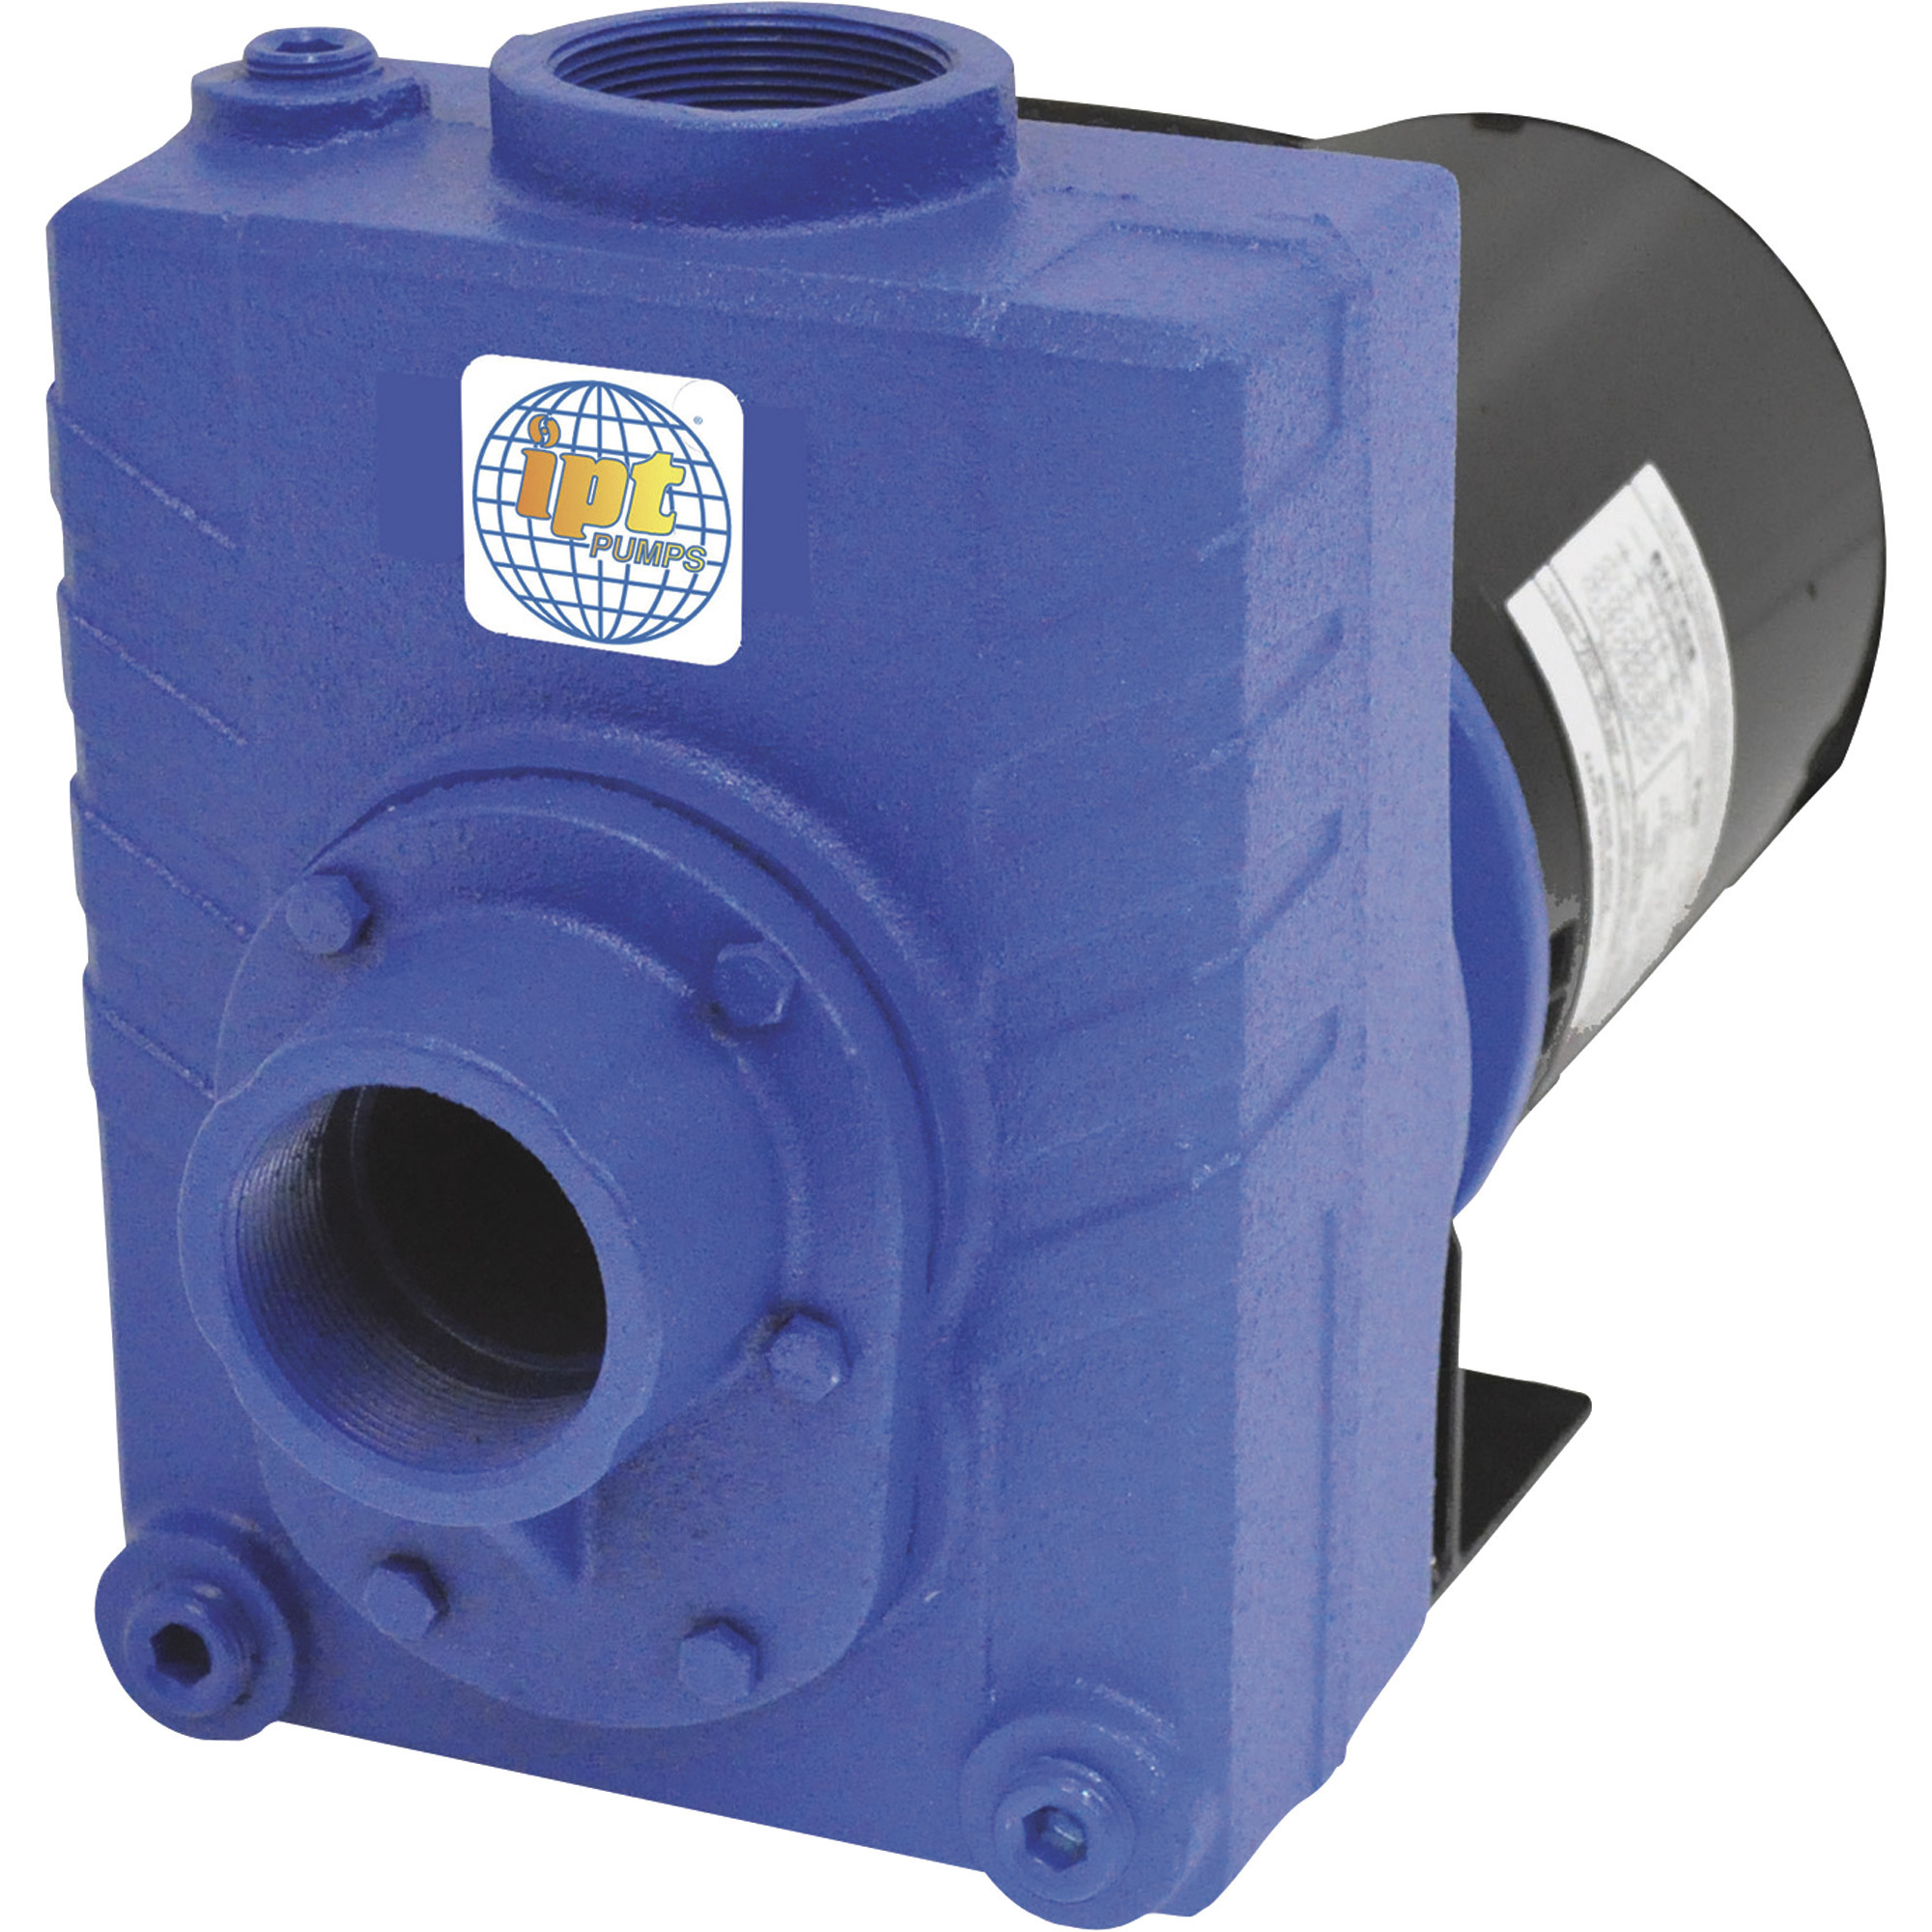 IPT Cast Iron Self-Priming Centrifugal Water Pump â 7,500 GPH, 2 HP, 2Inch, Model 2763-IPT-95